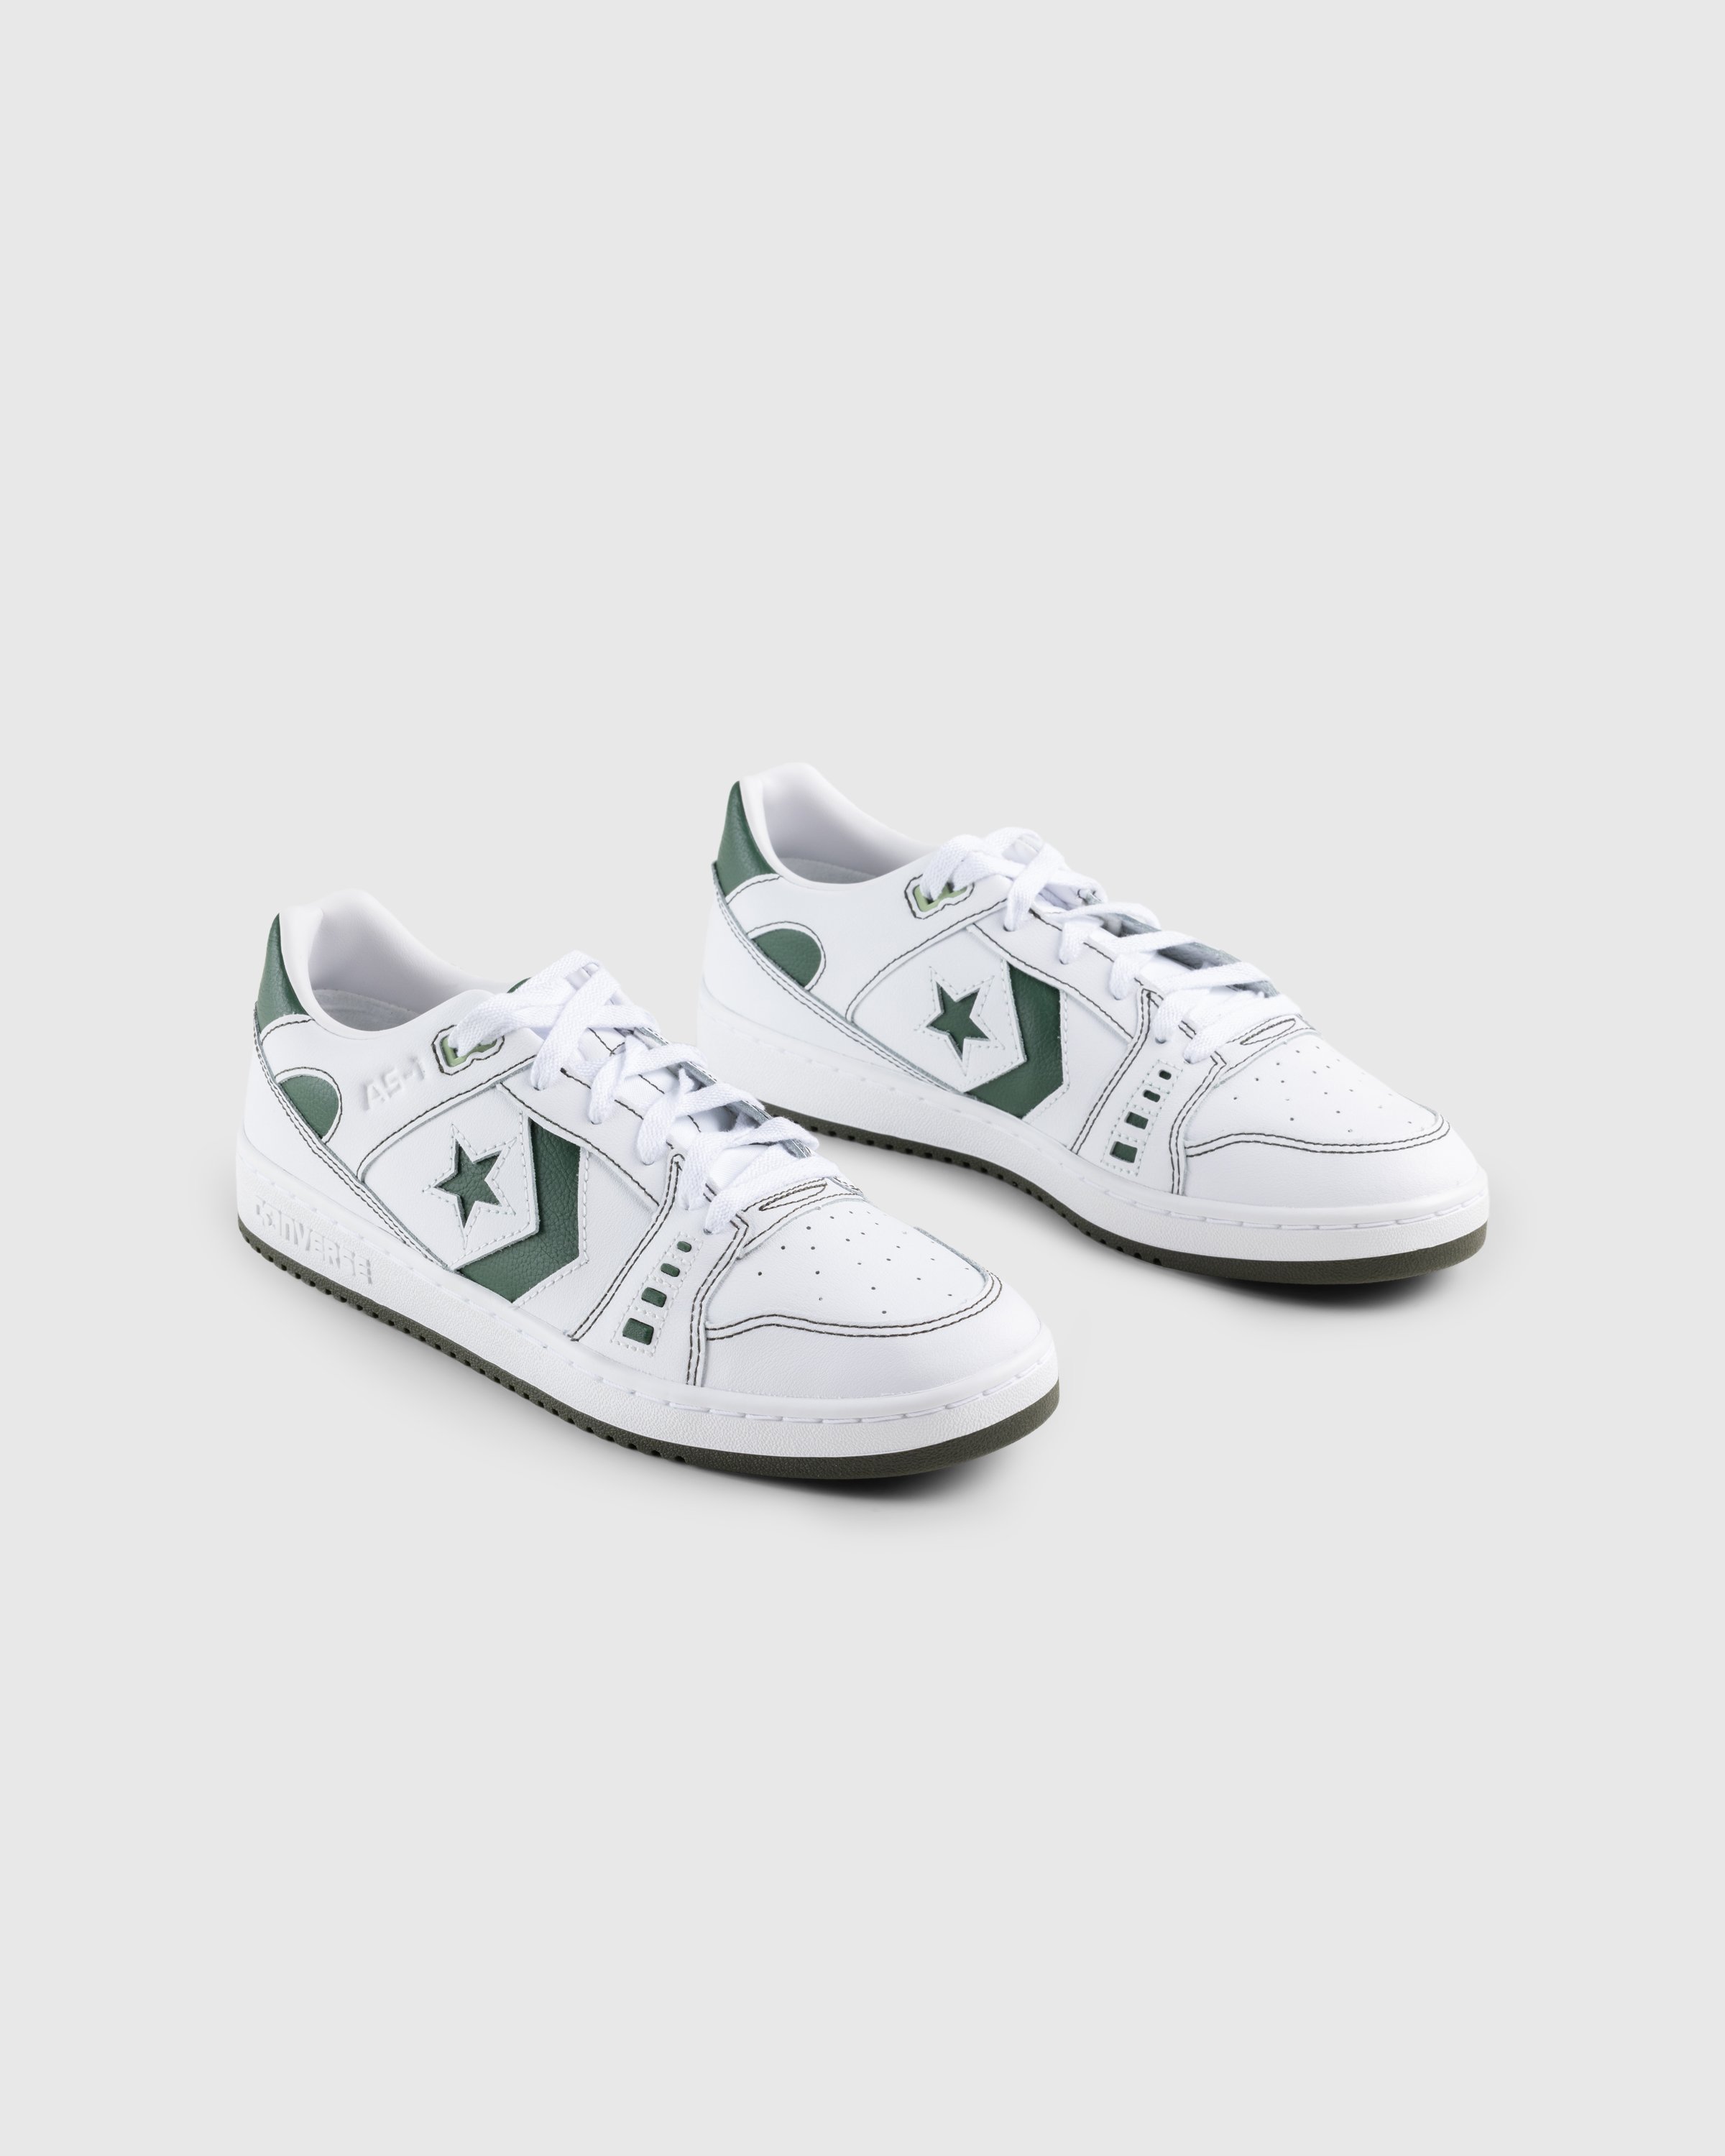 Converse - AS-1 Pro Ox White/Fir/White - Footwear - White - Image 3